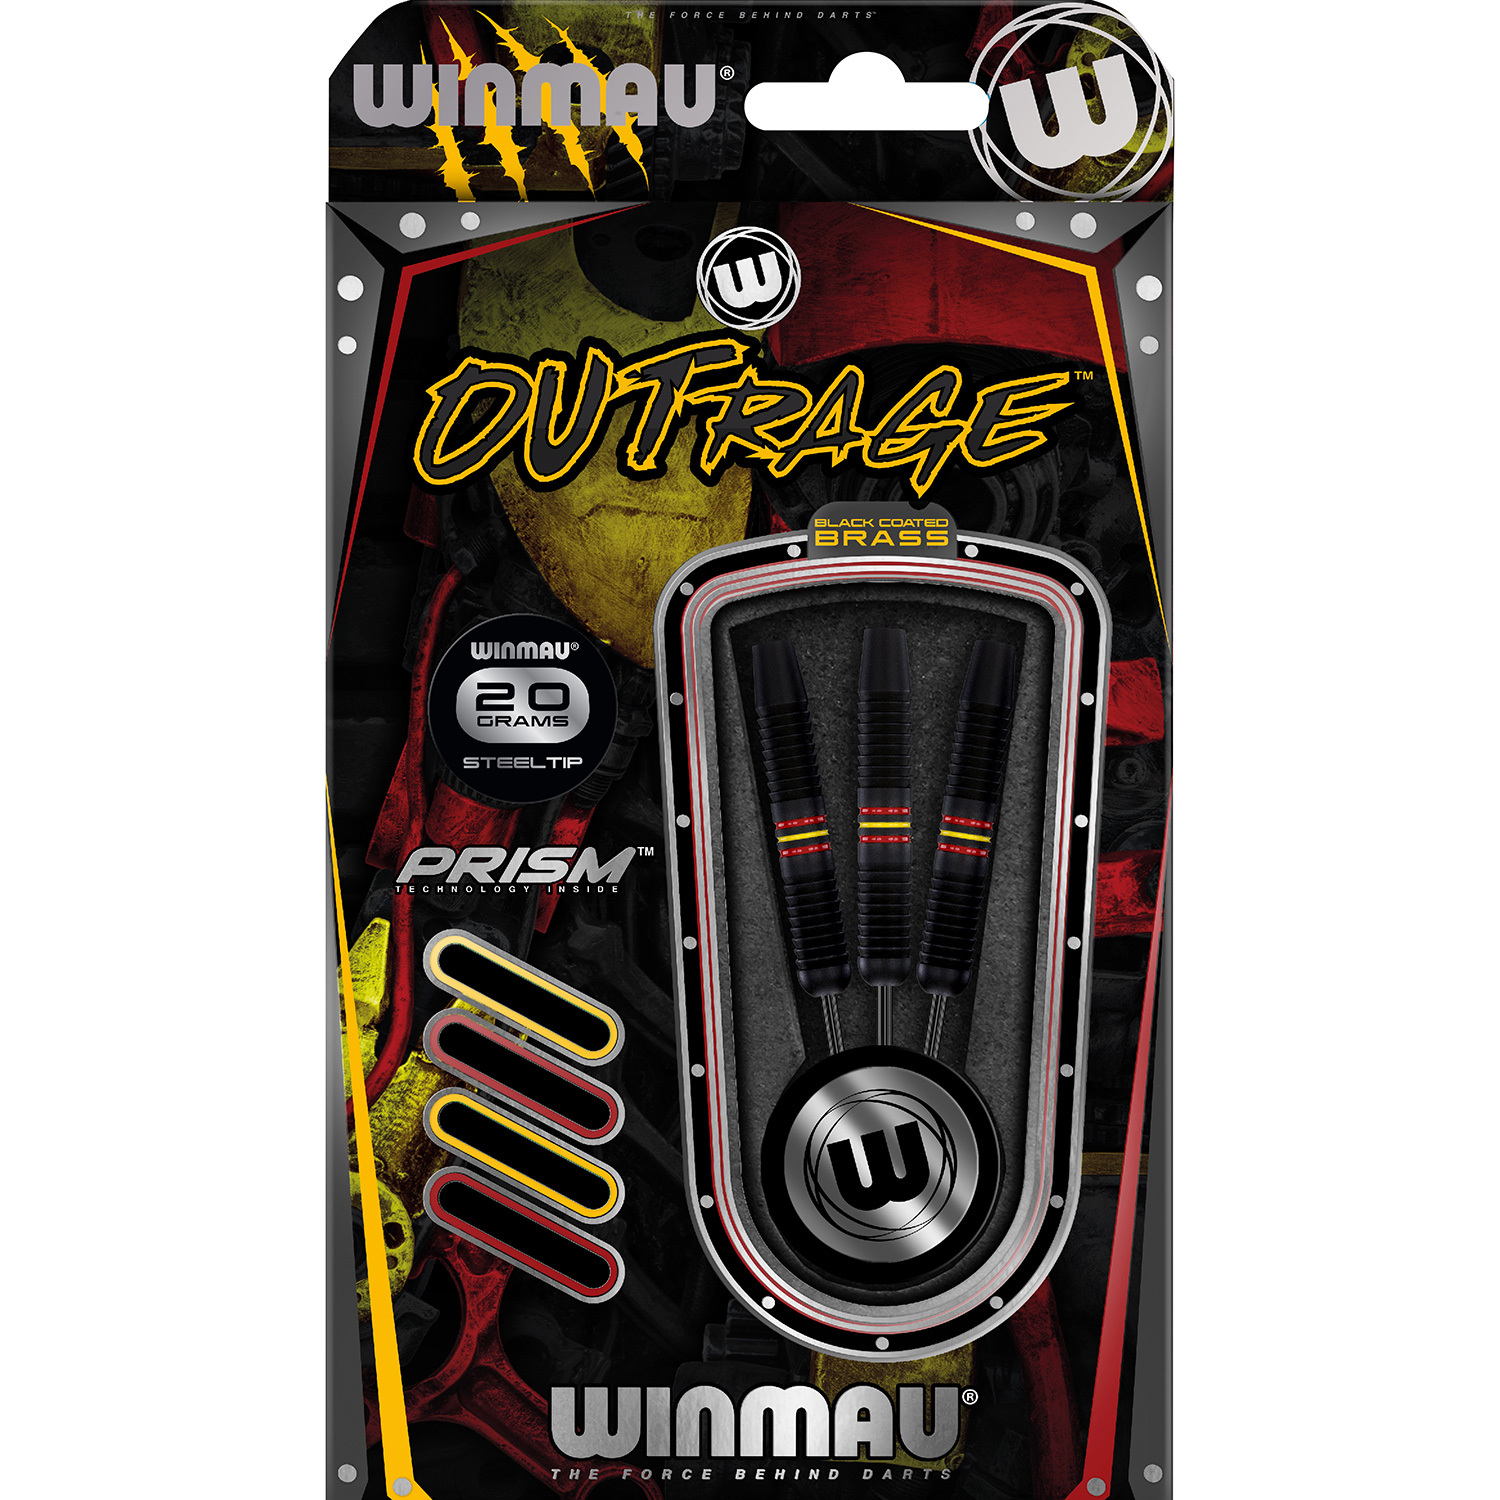 WINMAU Winmau Outrage steeltip darts Brass 20gr